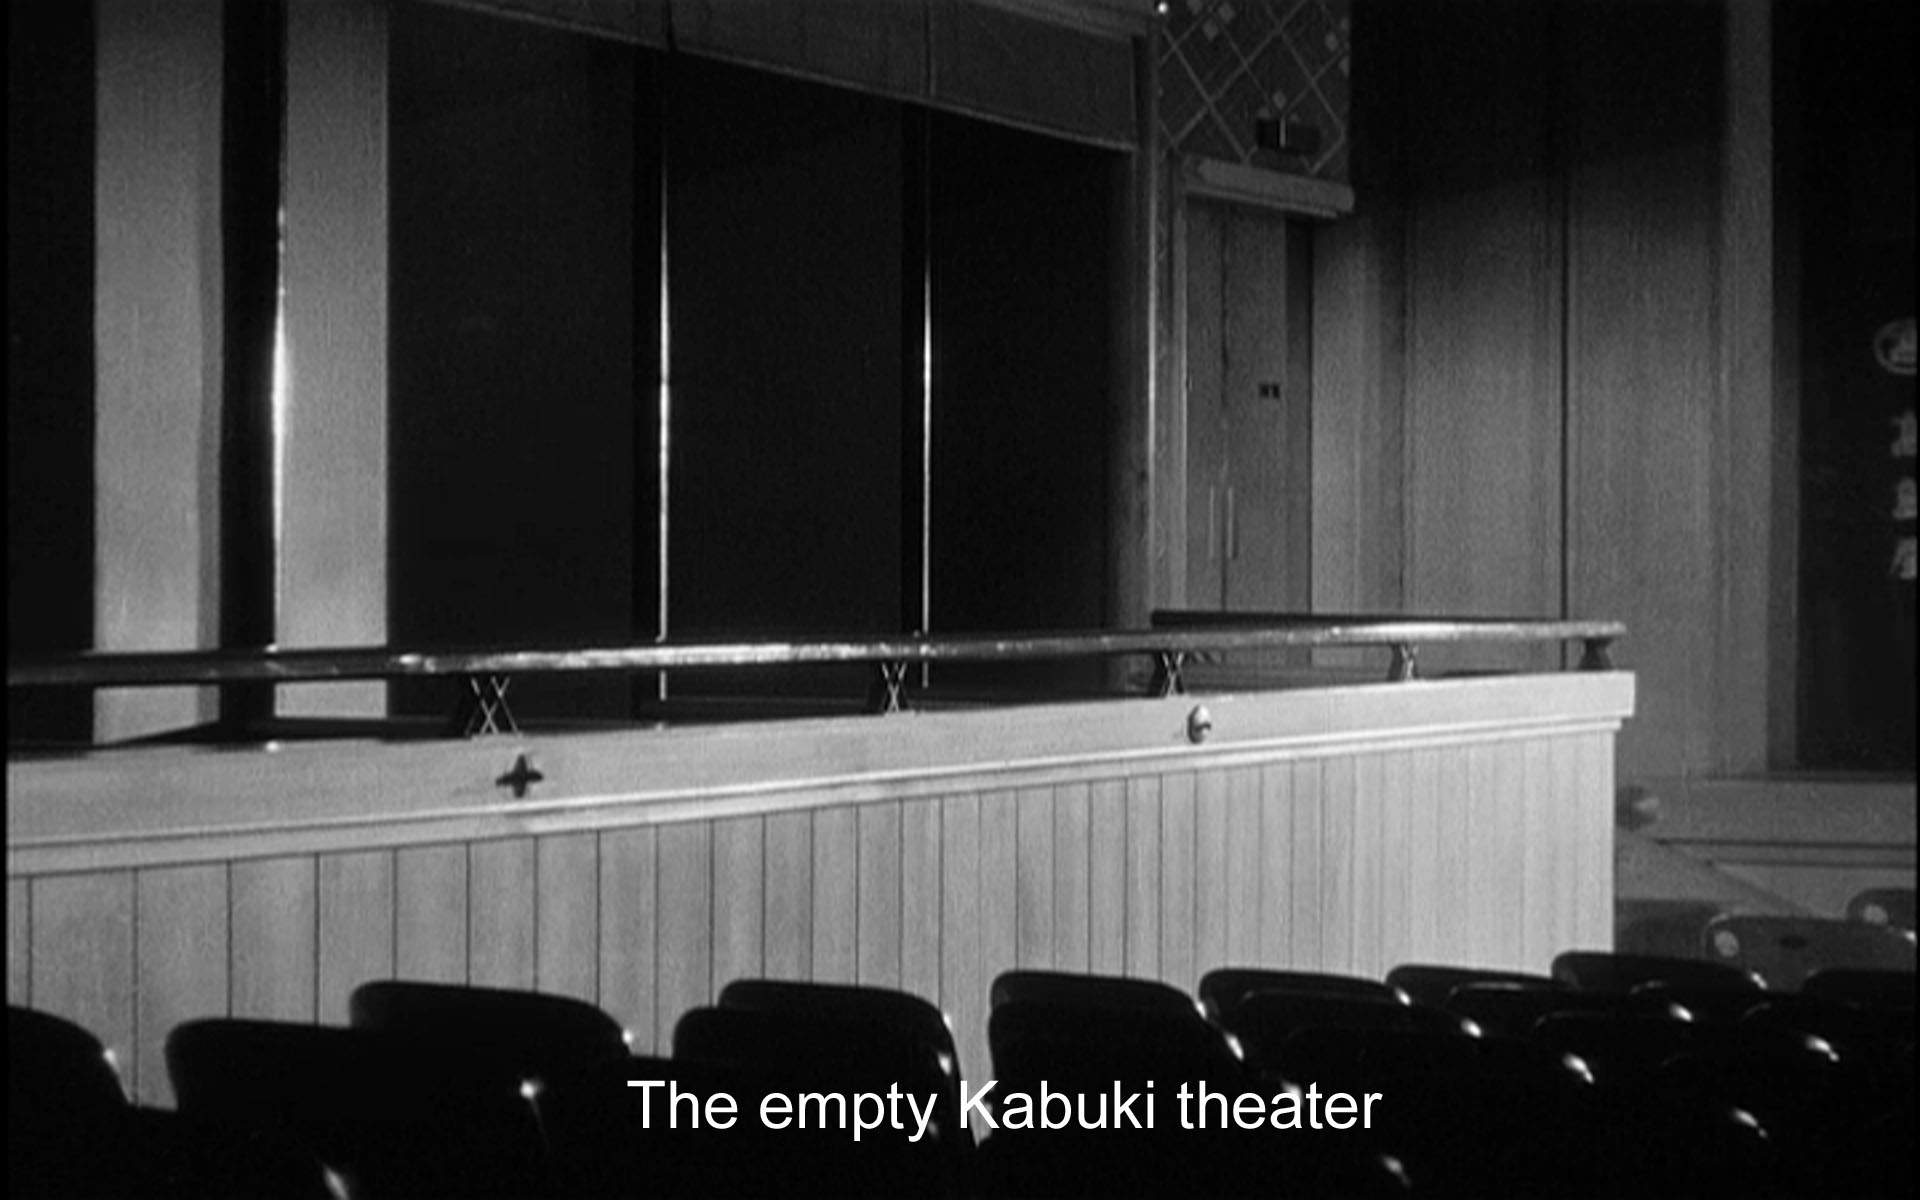 The empty Kabuki theater